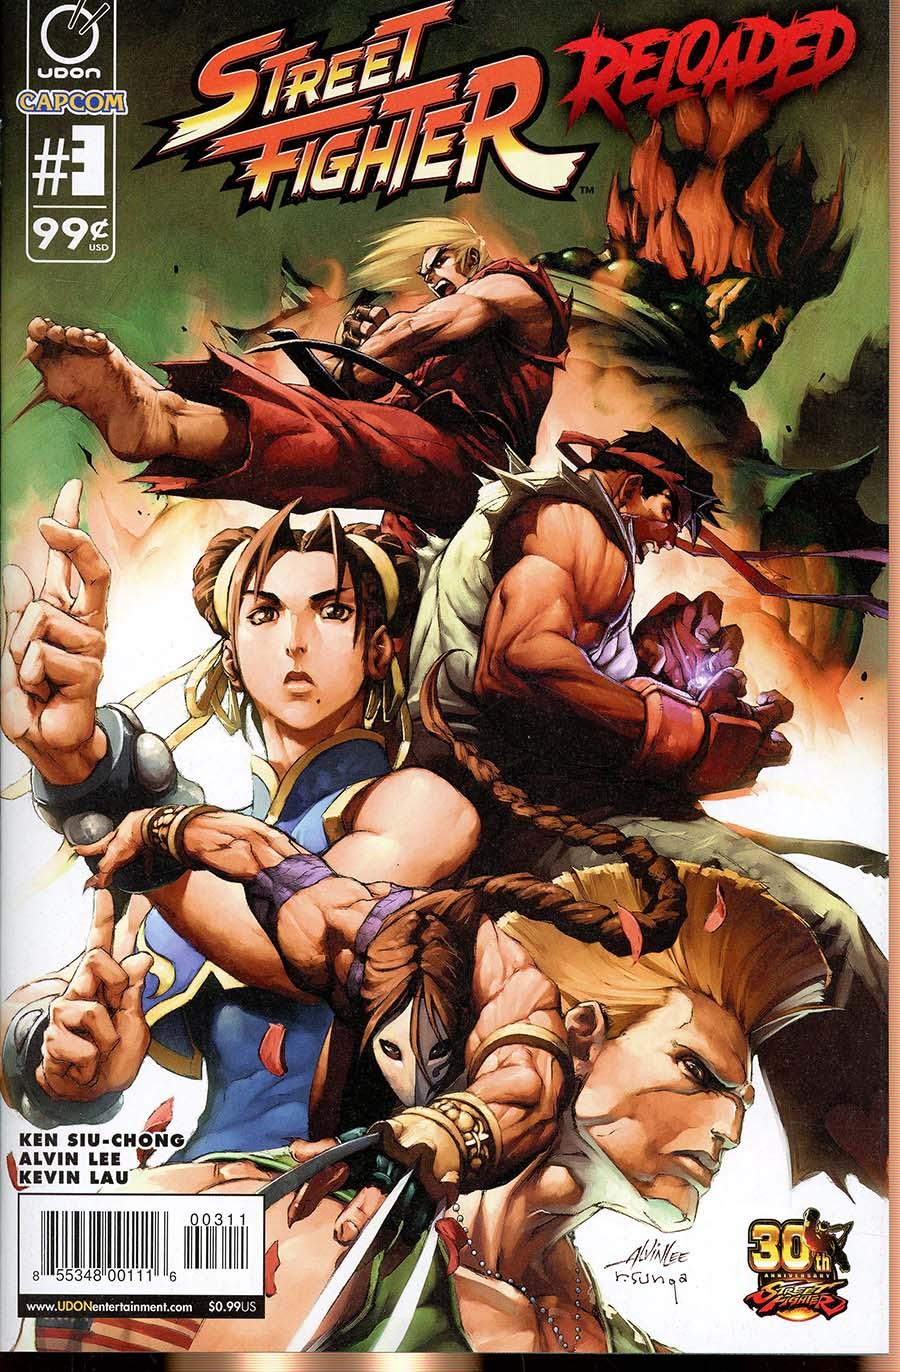 Street Fighter Reloaded Vol. 1 #3